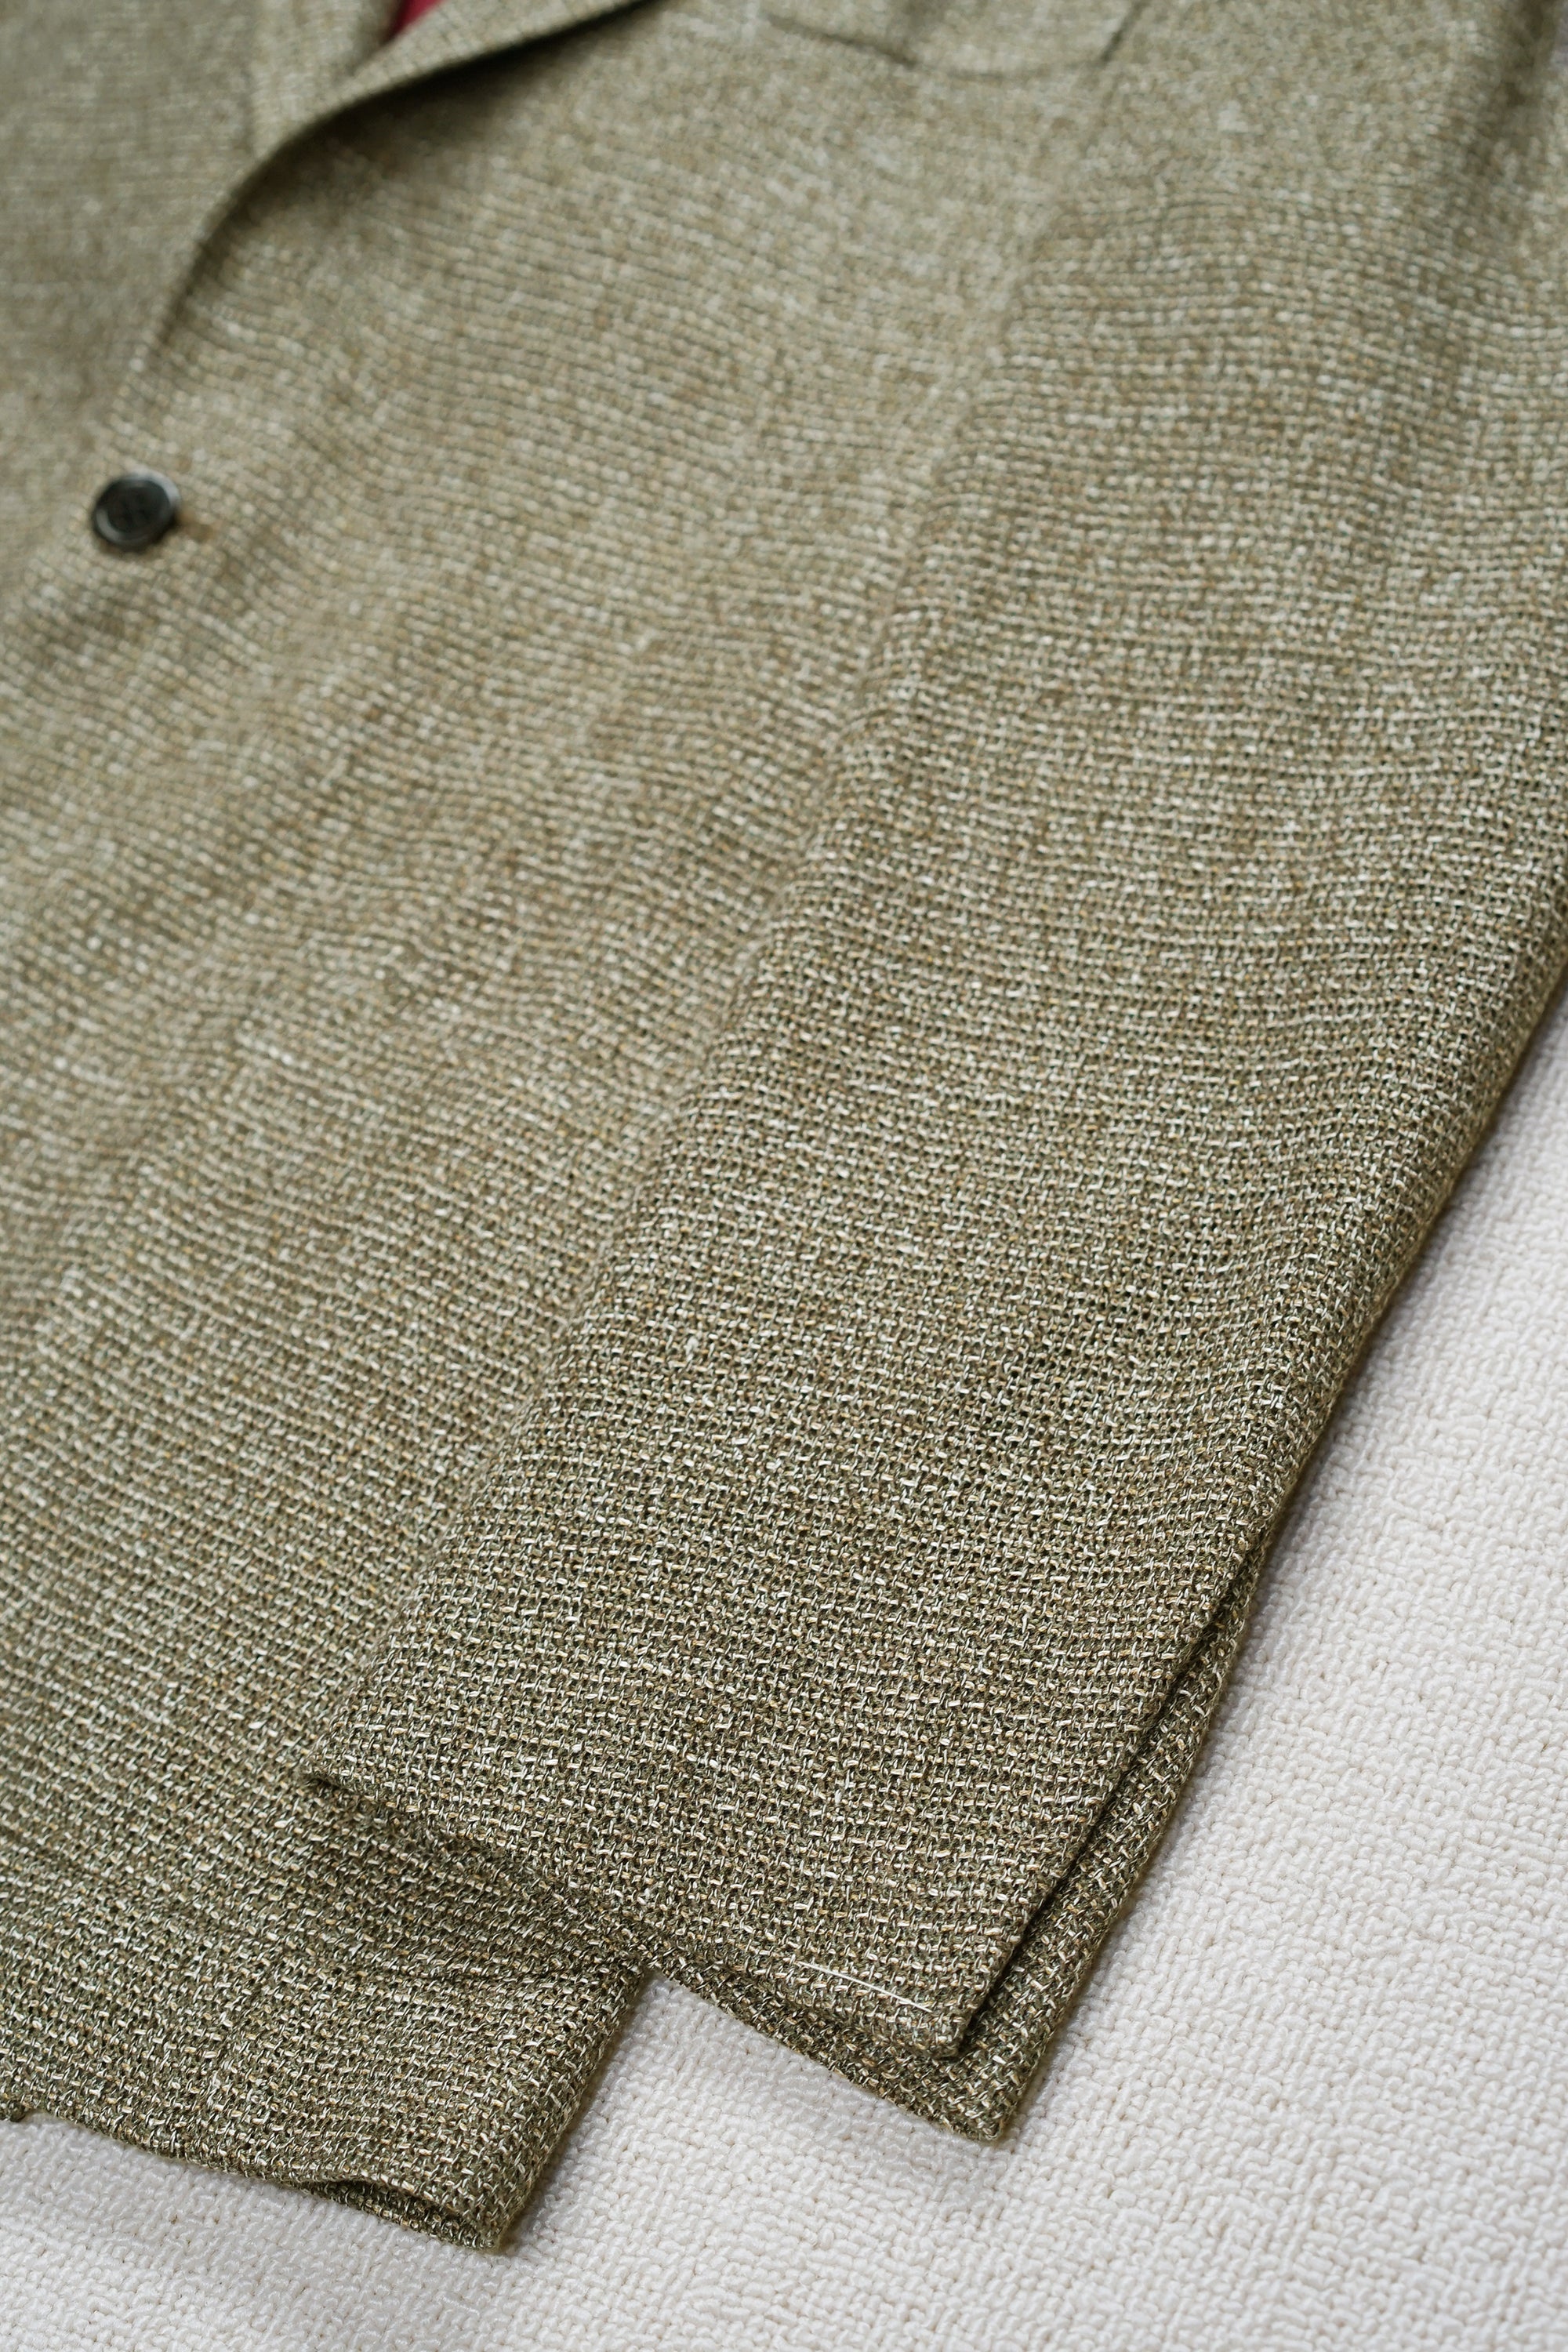 Ring Jacket Model TAJ-02/300 Orchard Green Silk/Linen Sport Coat